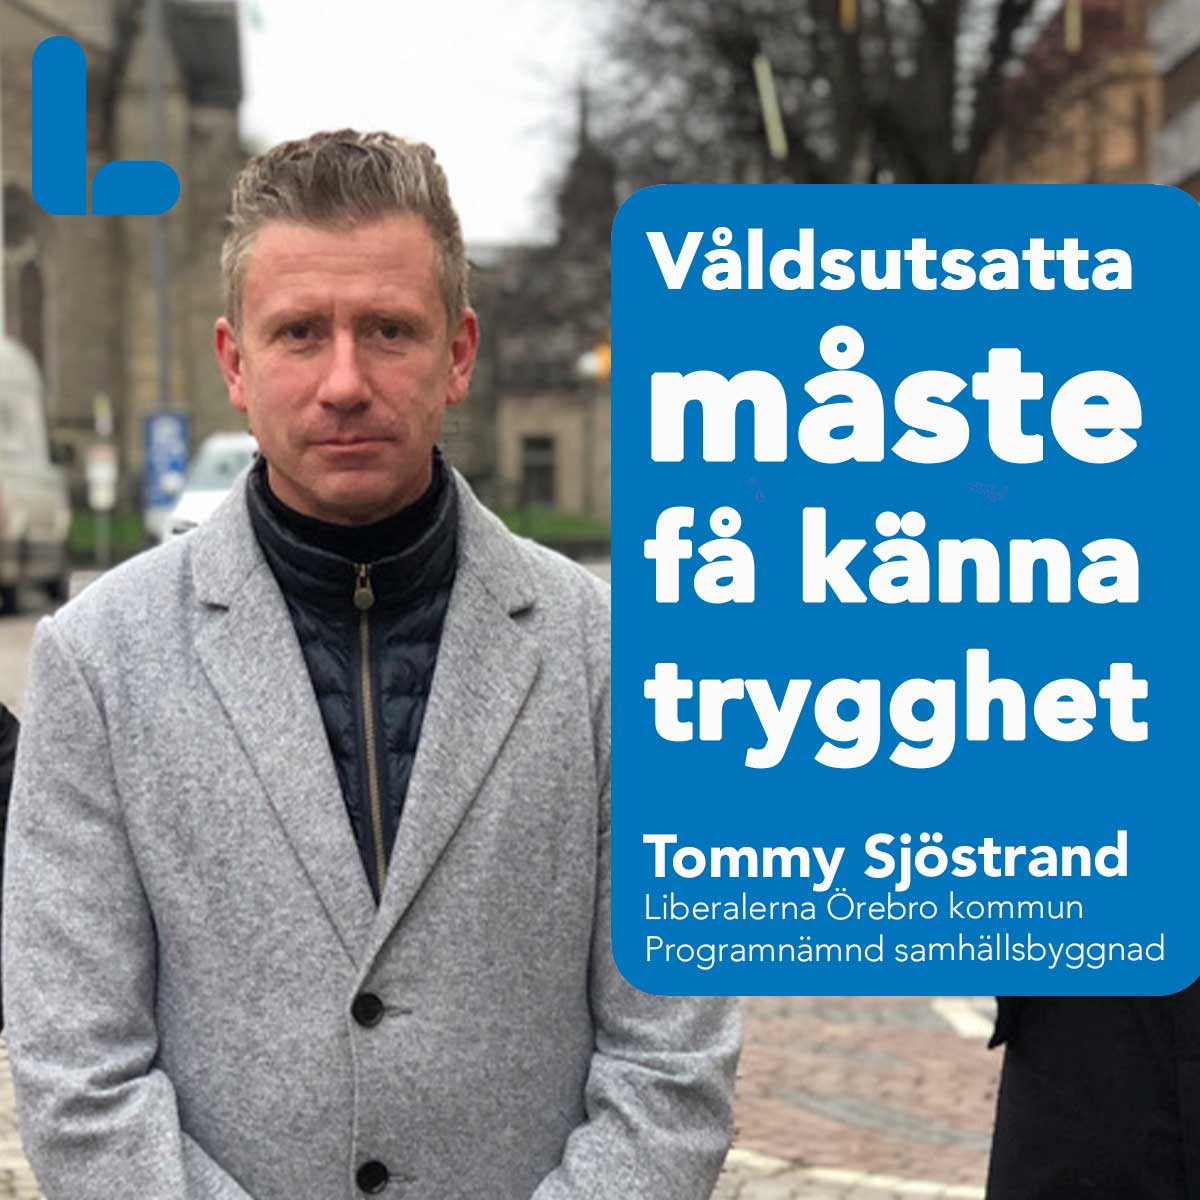 Toimmy Sjöstrand